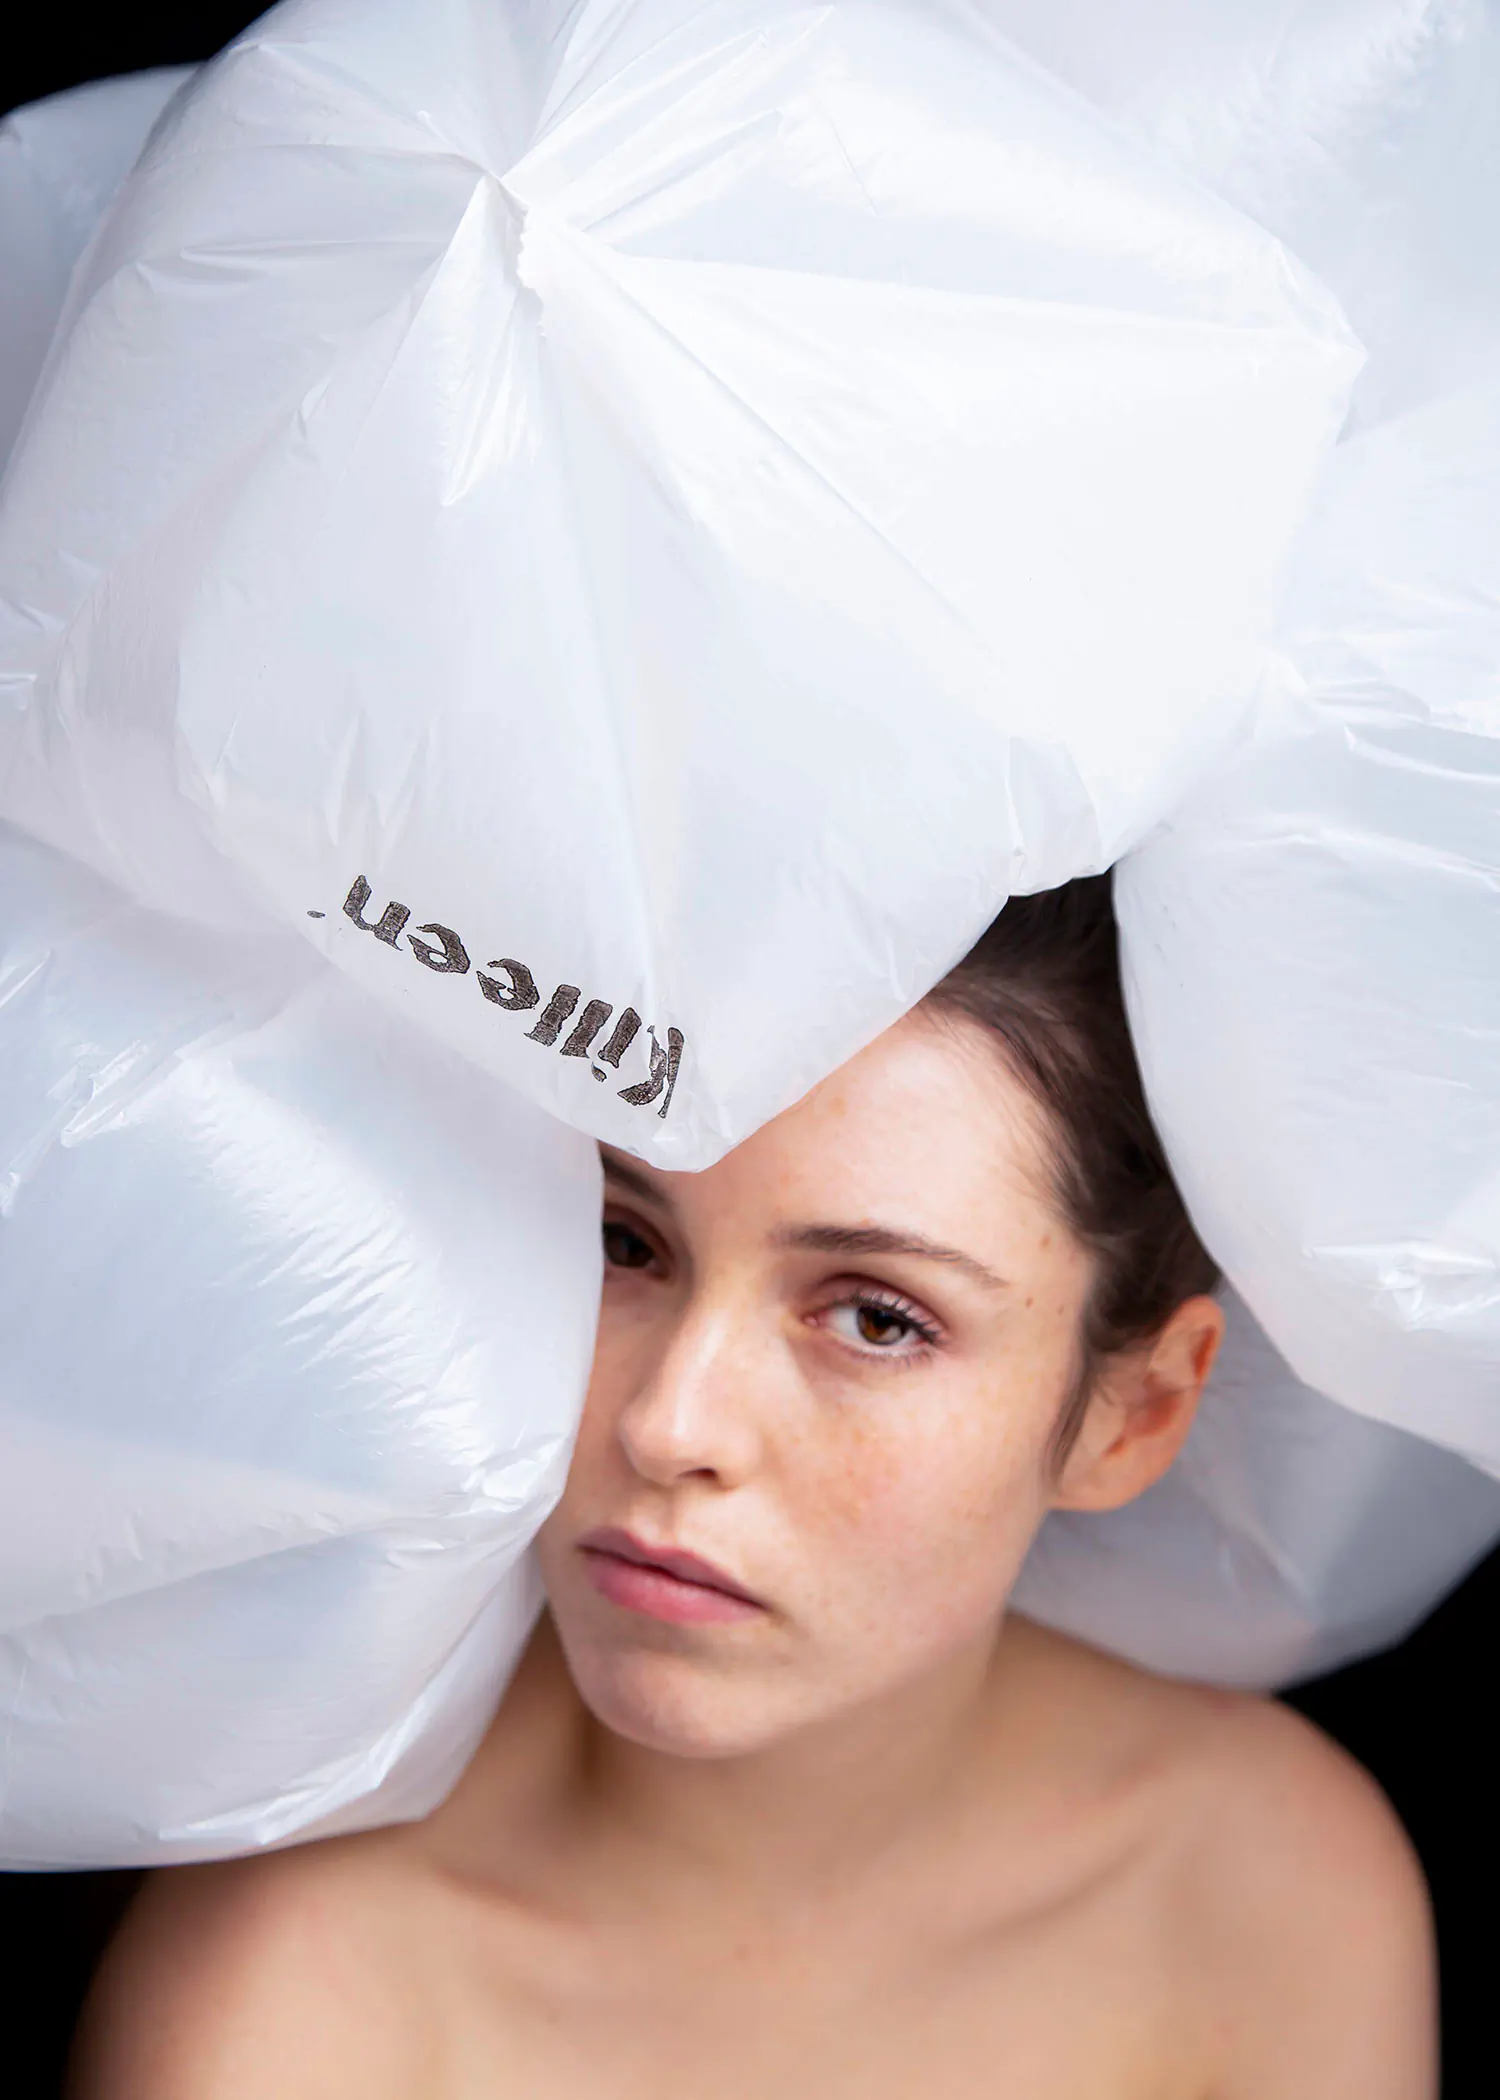 Single-use plastic bag awareness portrait of young woman